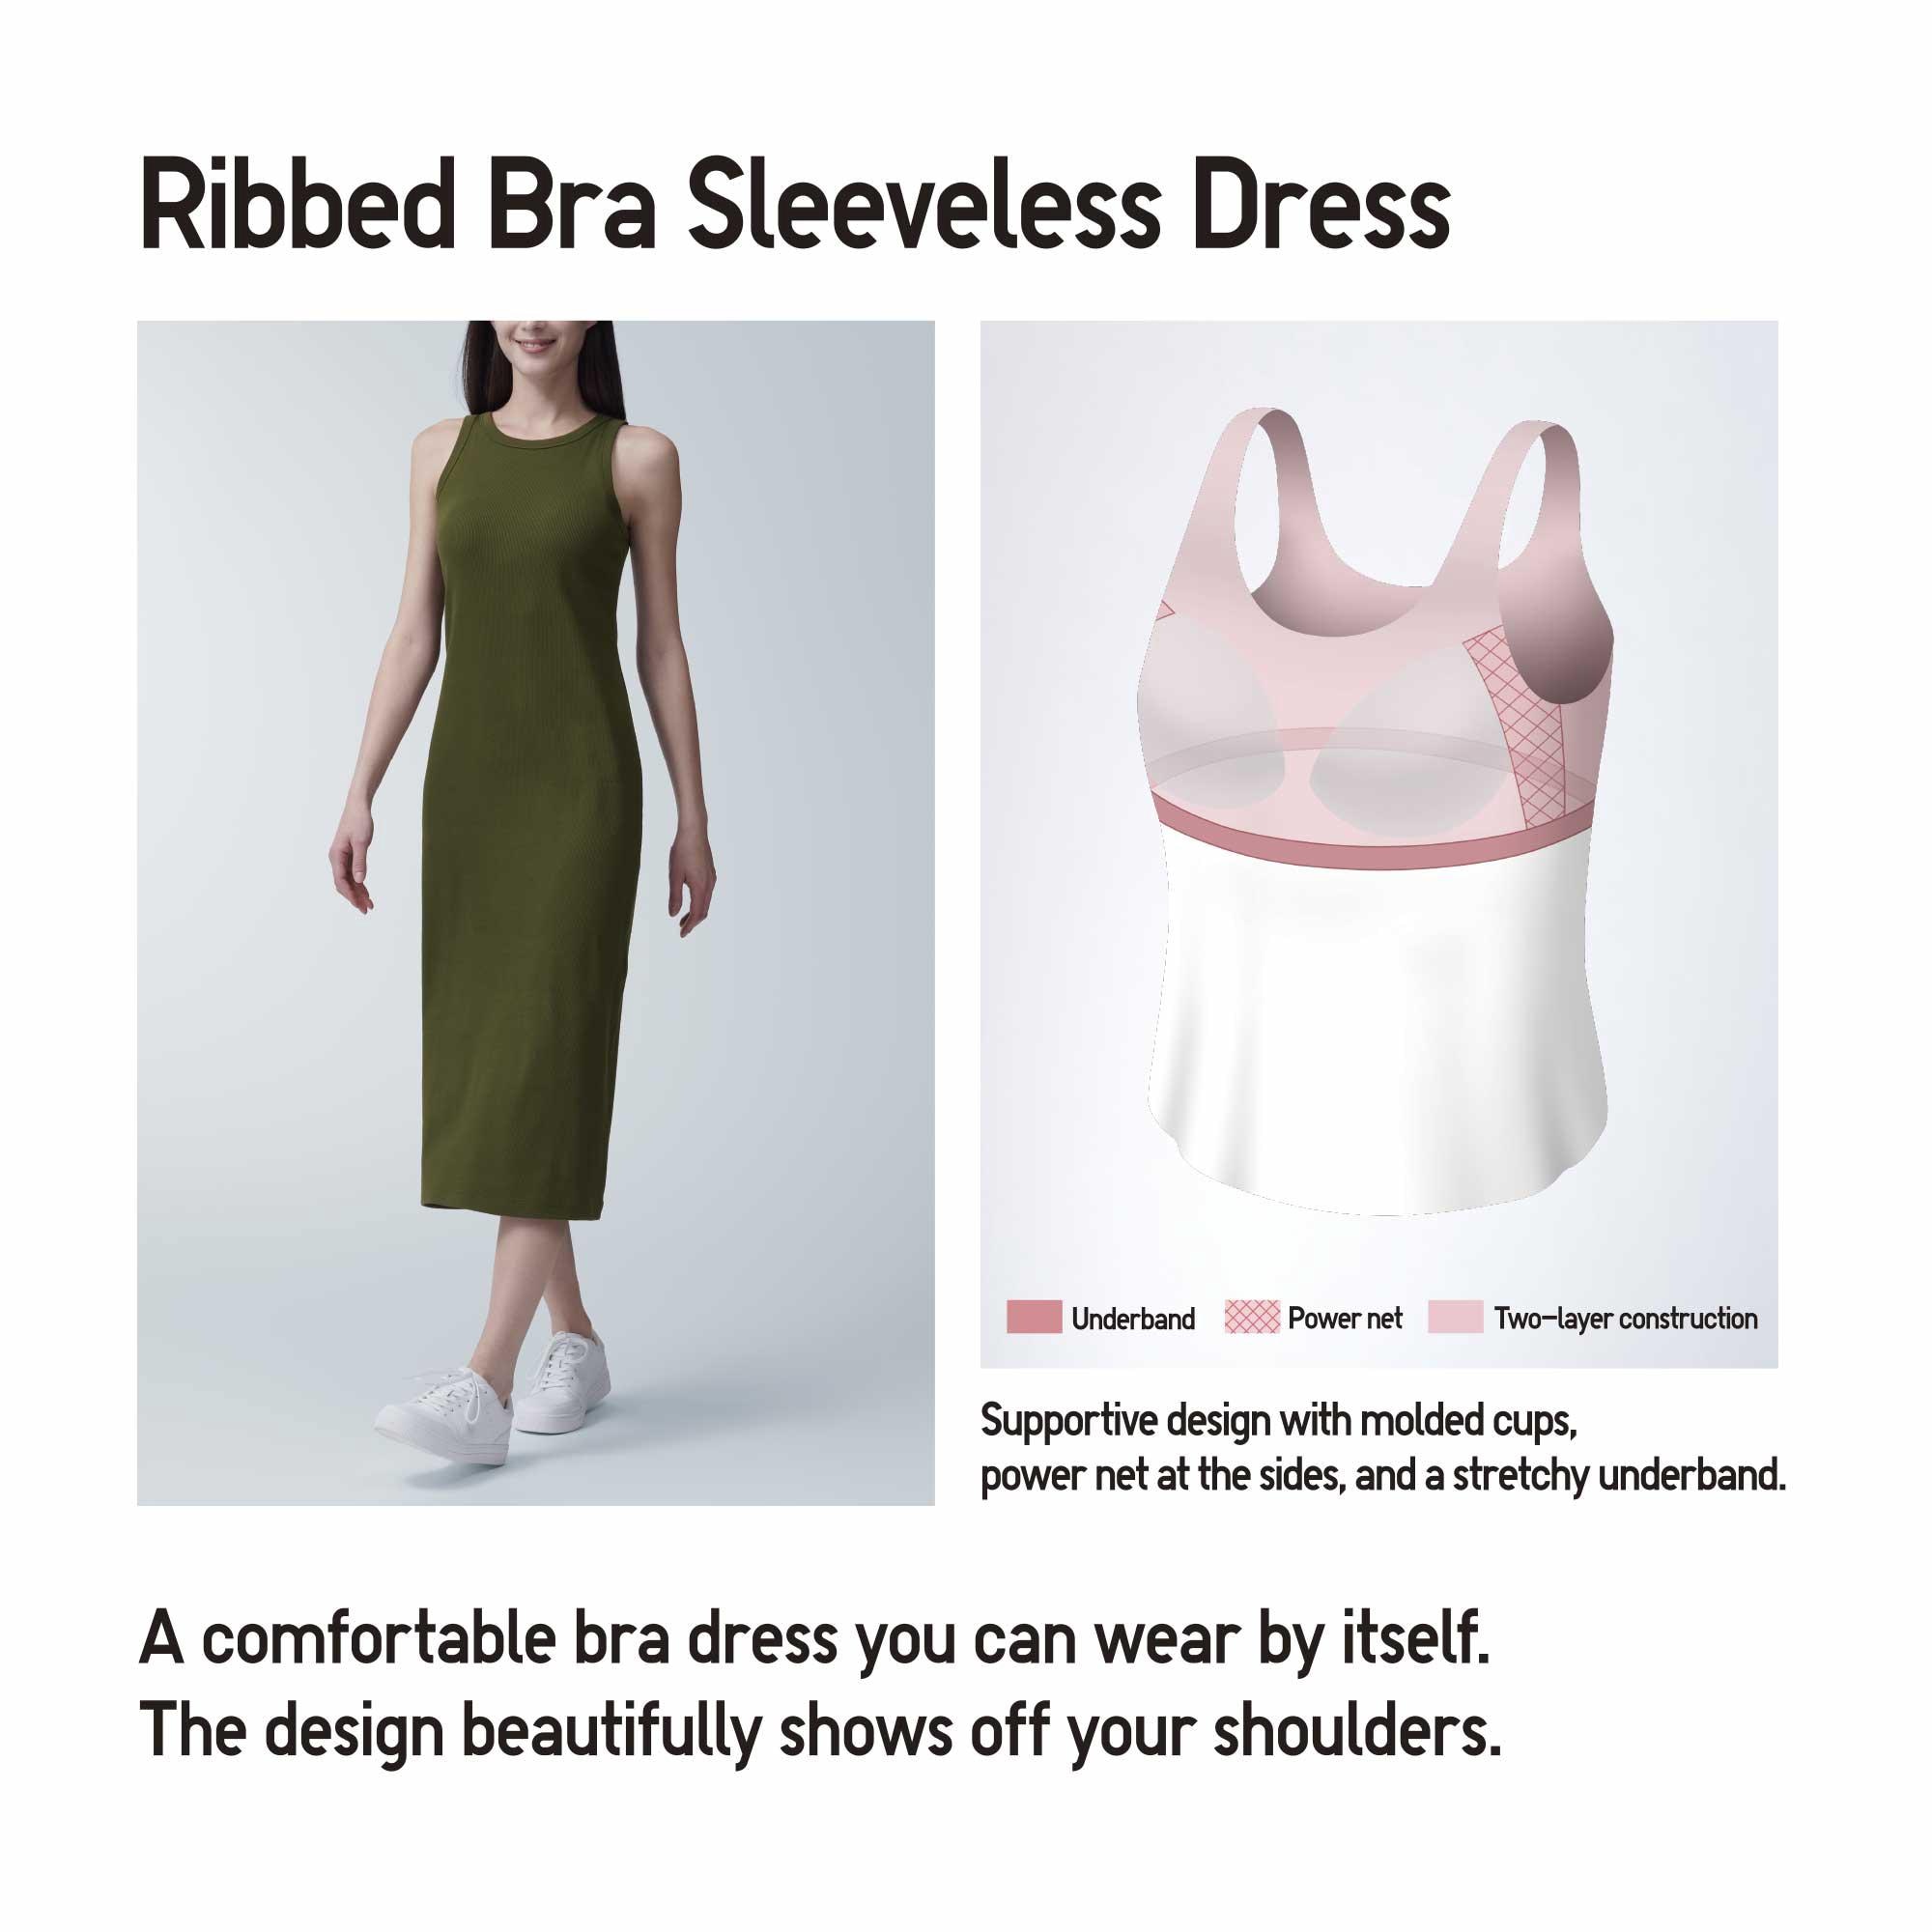 RIBBED BRA SLEEVELESS DRESS